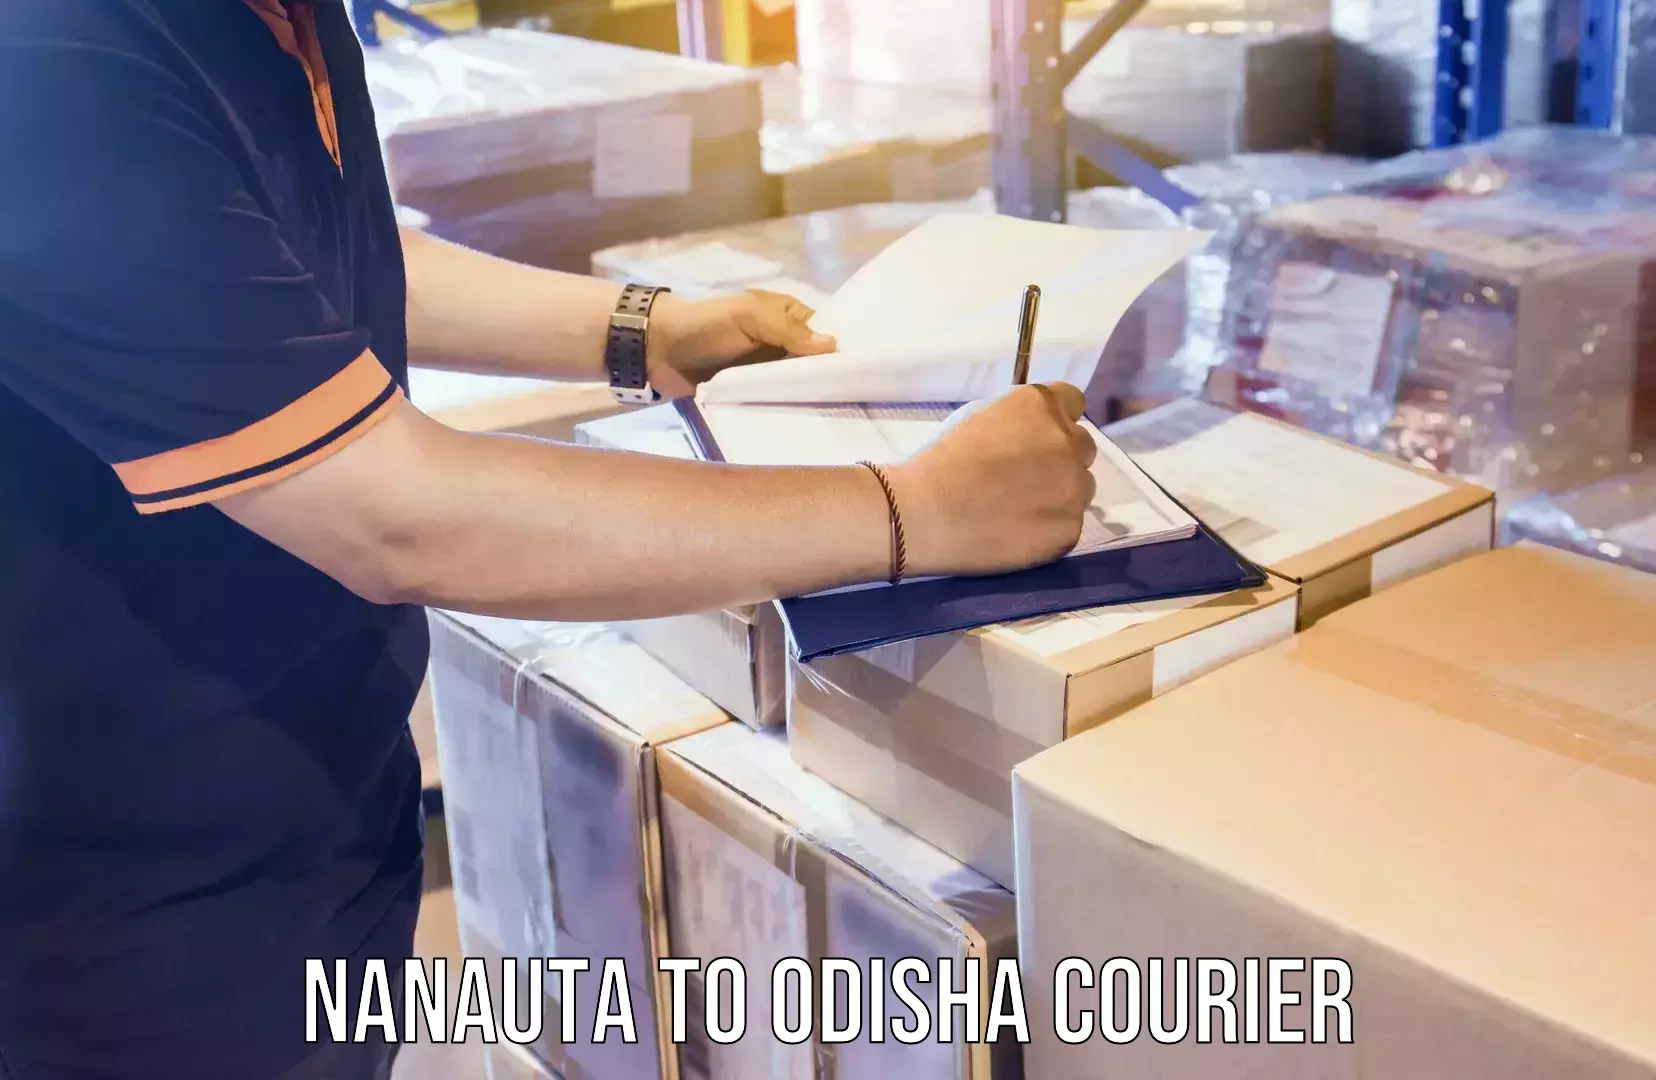 Quality moving company Nanauta to Odisha